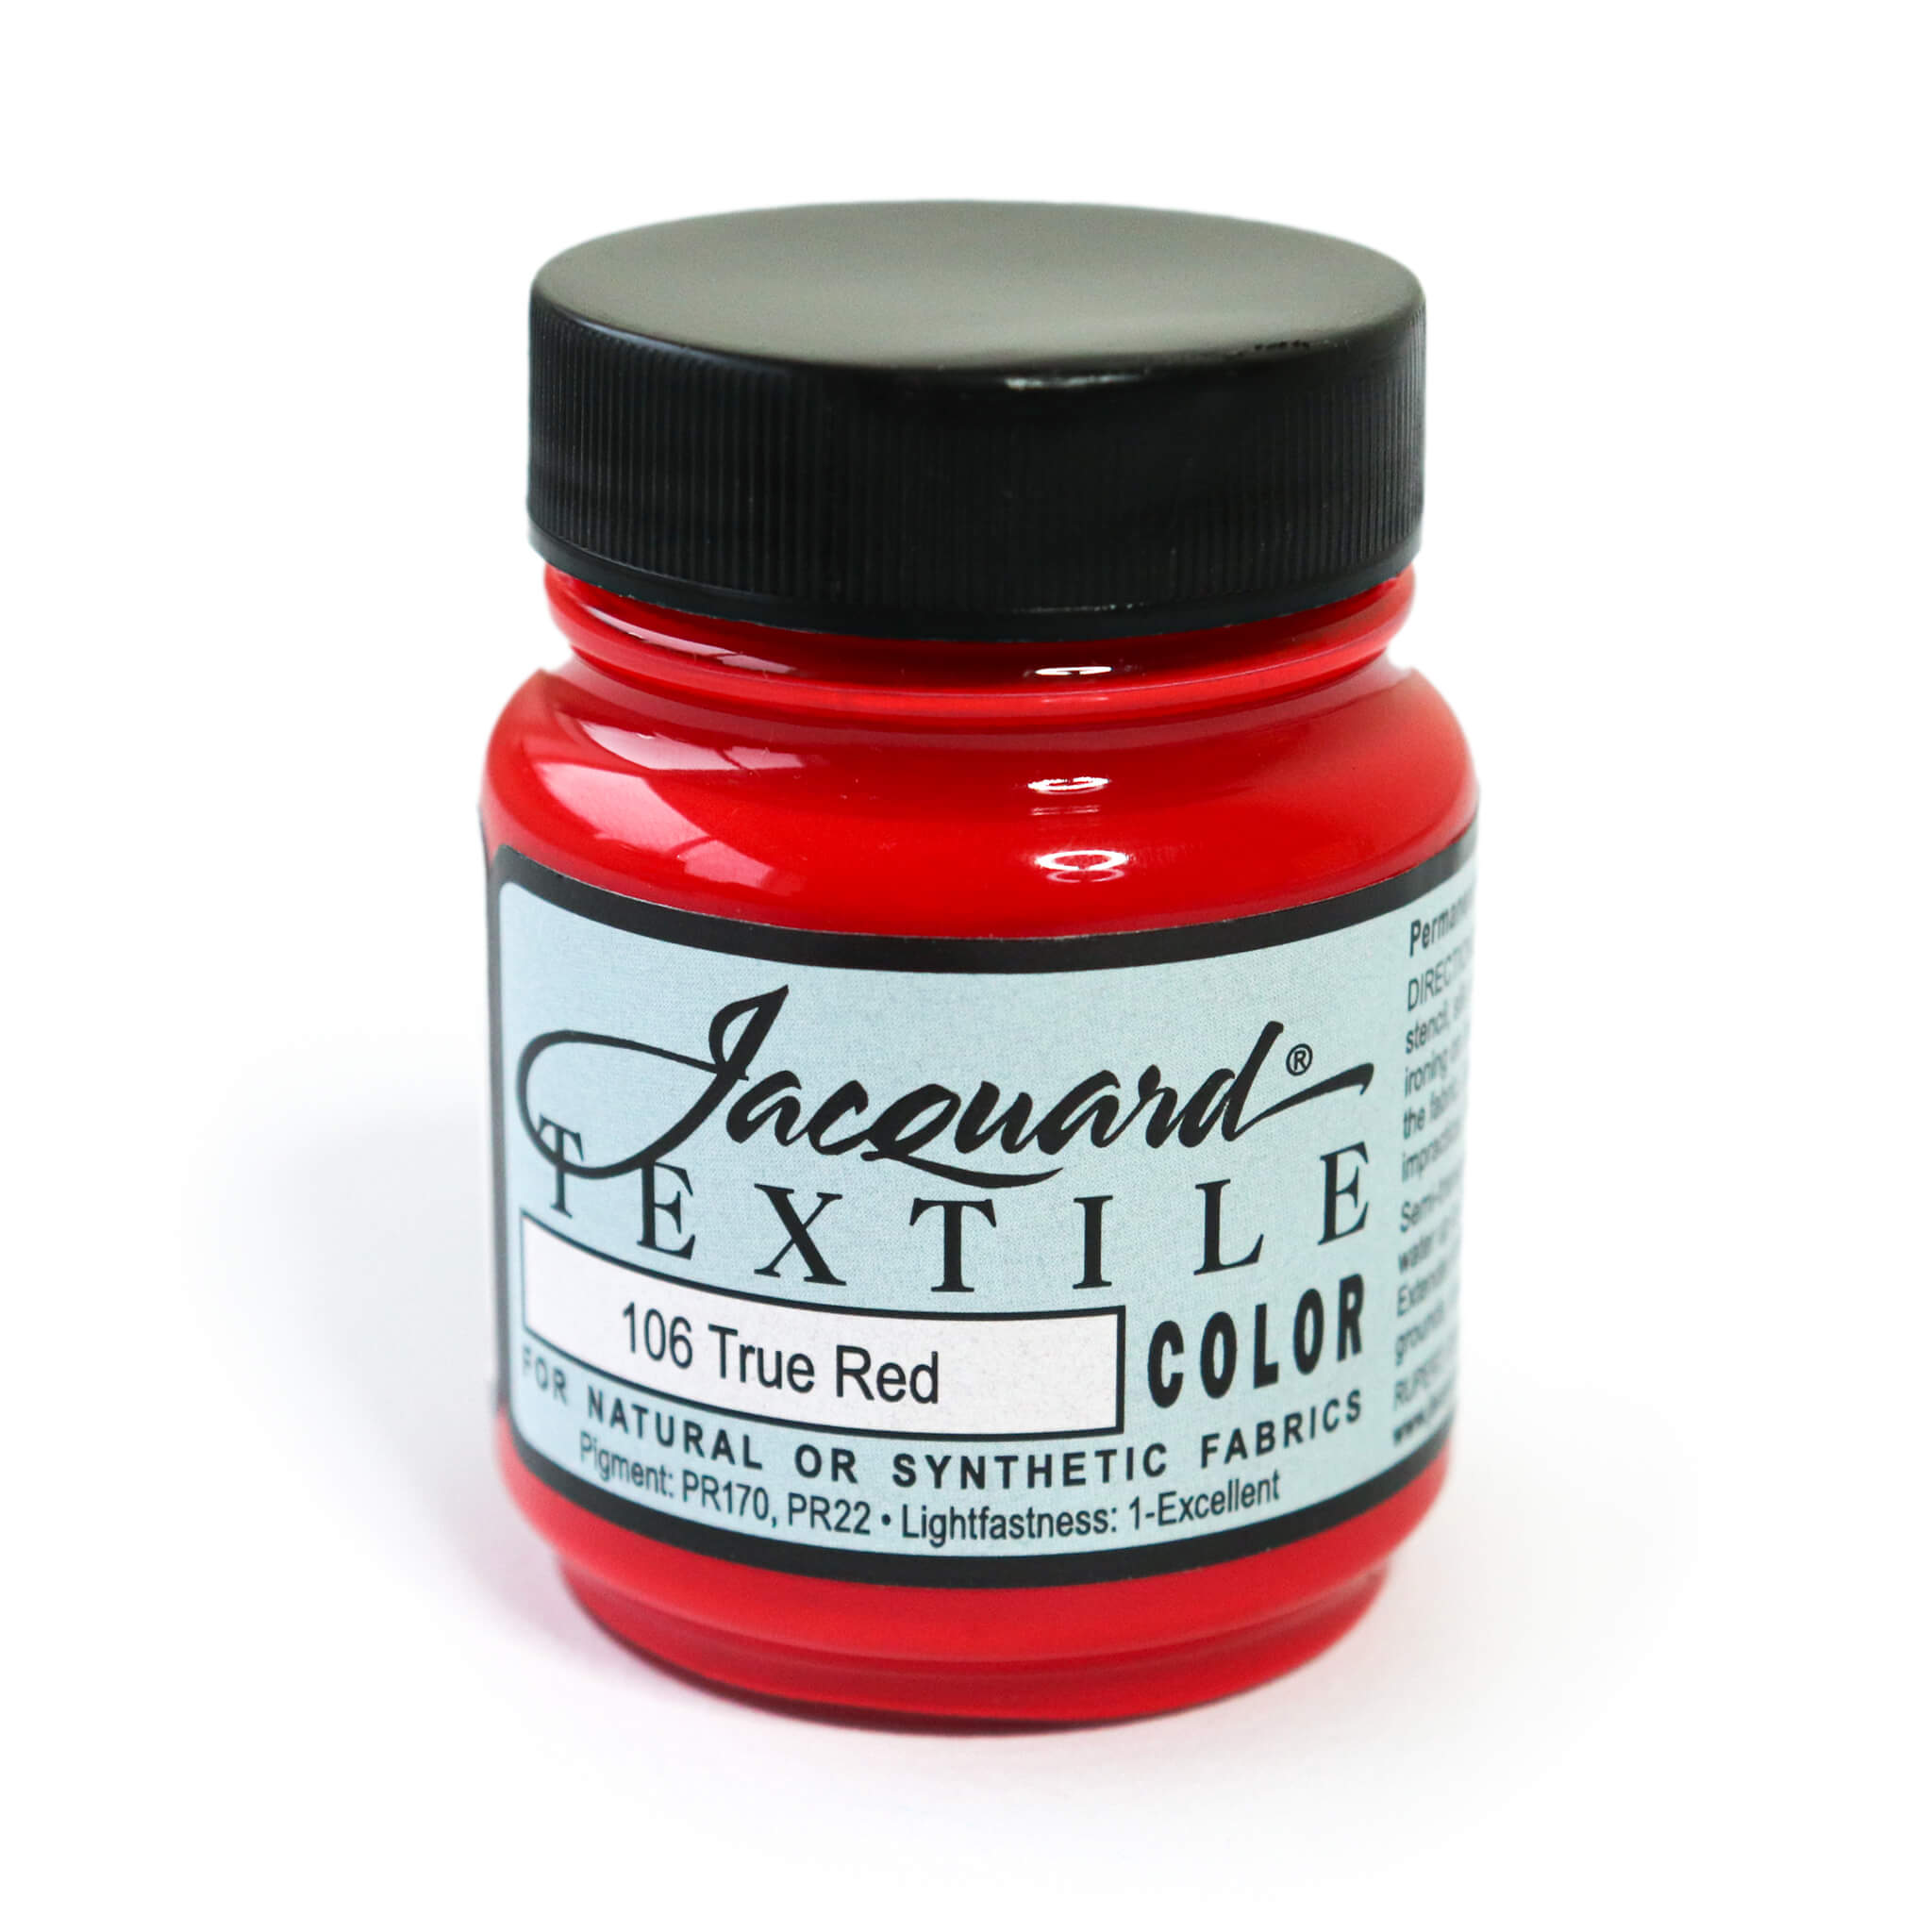 Jacquard Textile Color - True Red, 8 oz jar